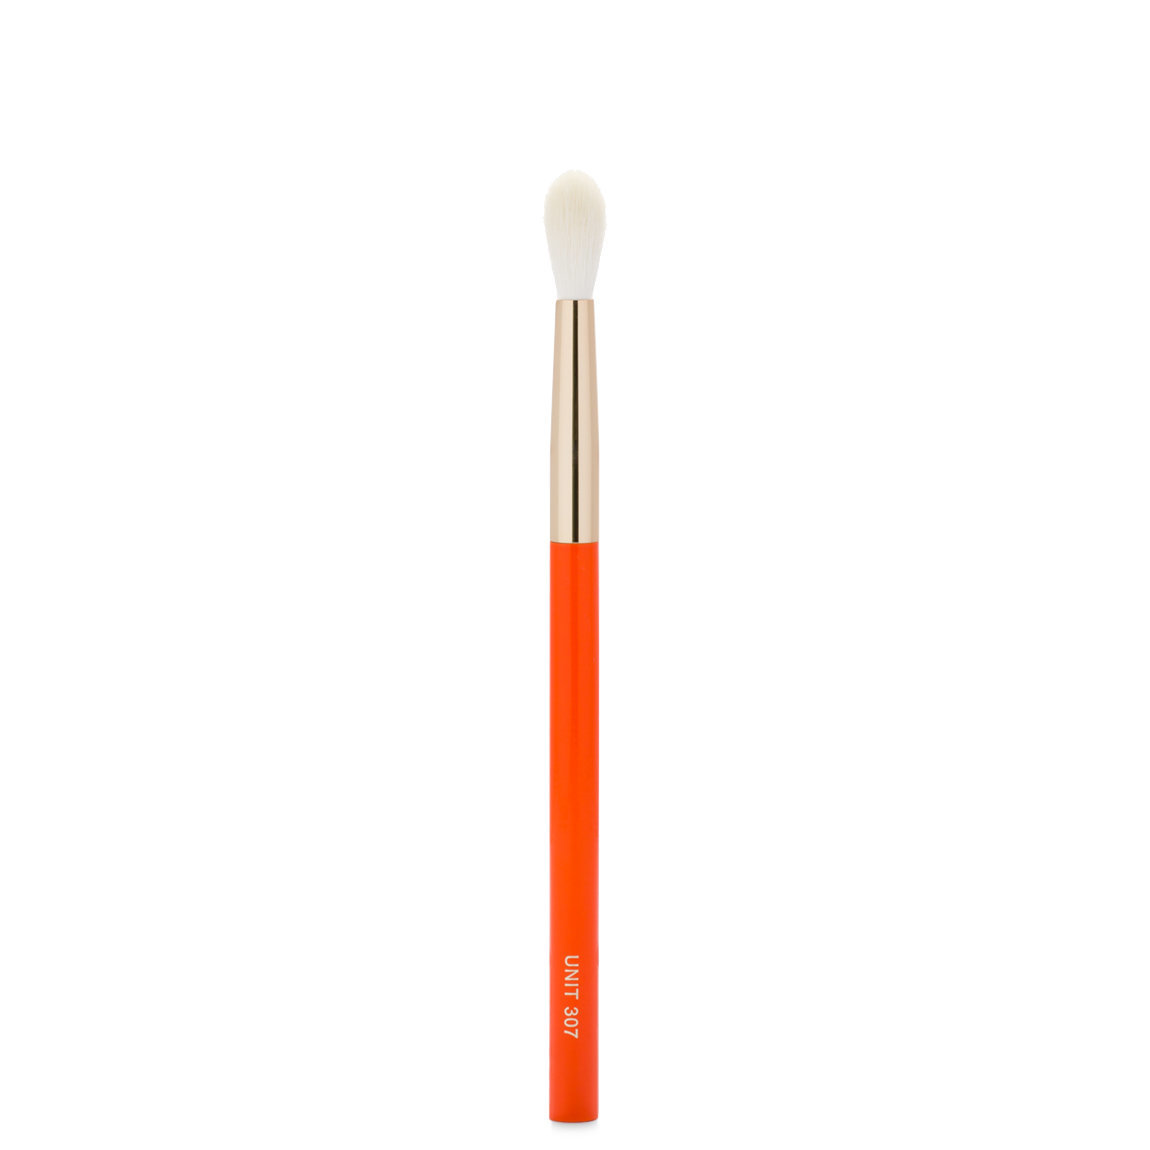 UNITS Orange Series UNIT 307 Tapered Eye Brush alternative view 1 - product swatch.